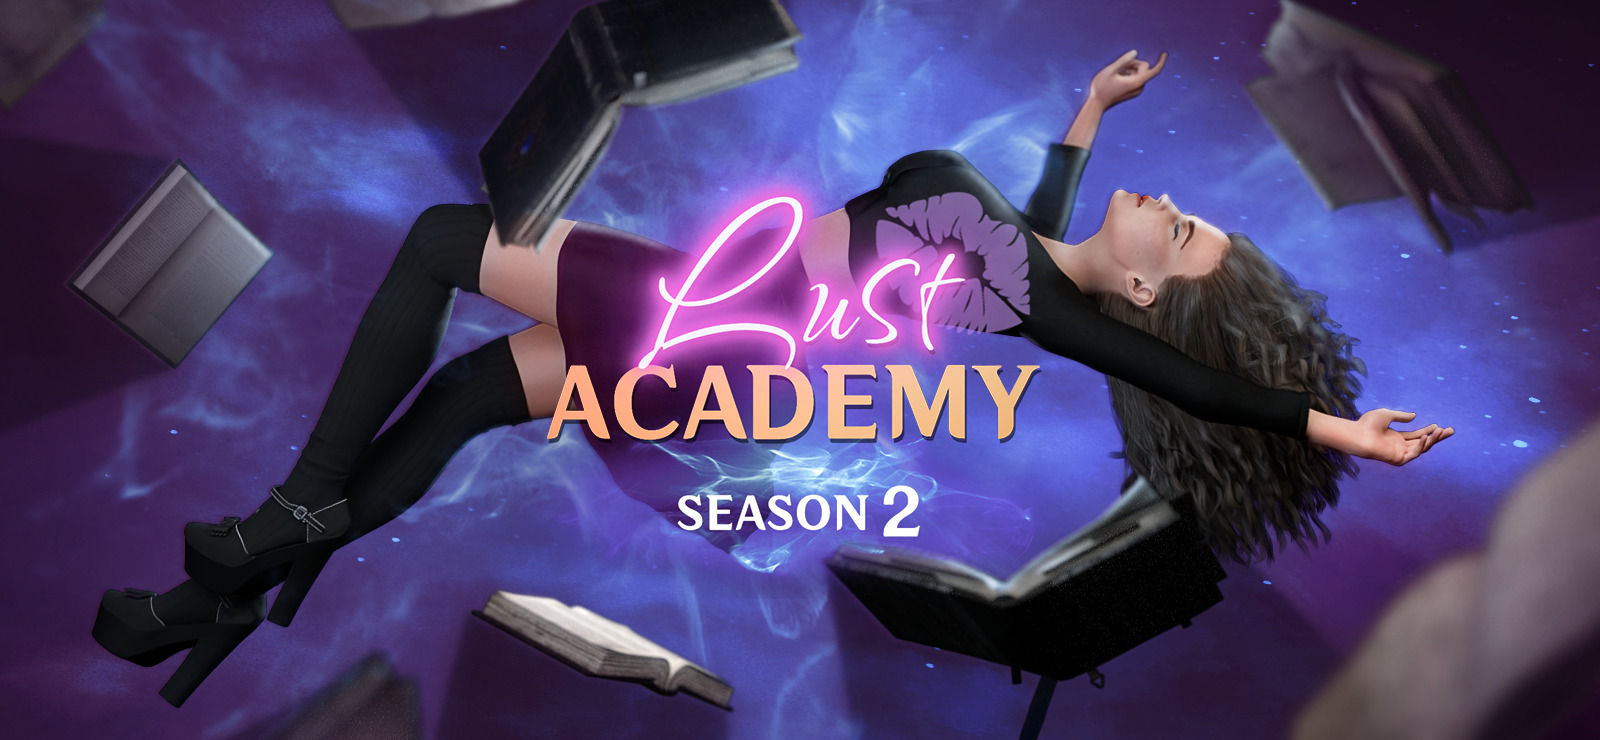 15% Lust Academy - Season 2 on GOG.com